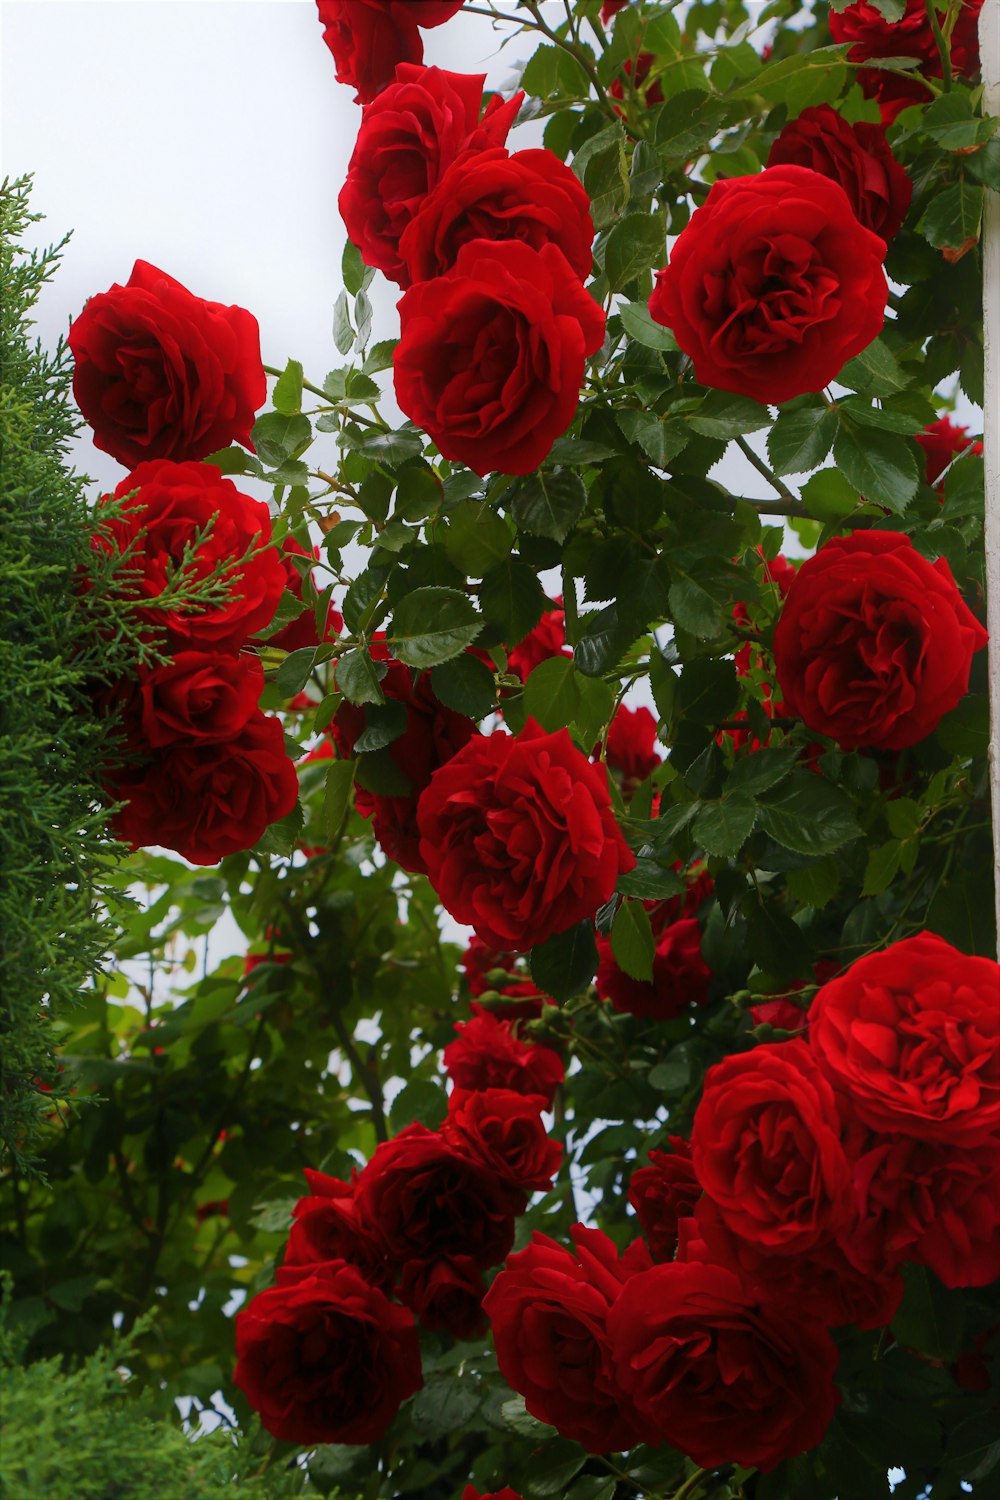 100 Rose Flower Pictures Download Free Images On Unsplash